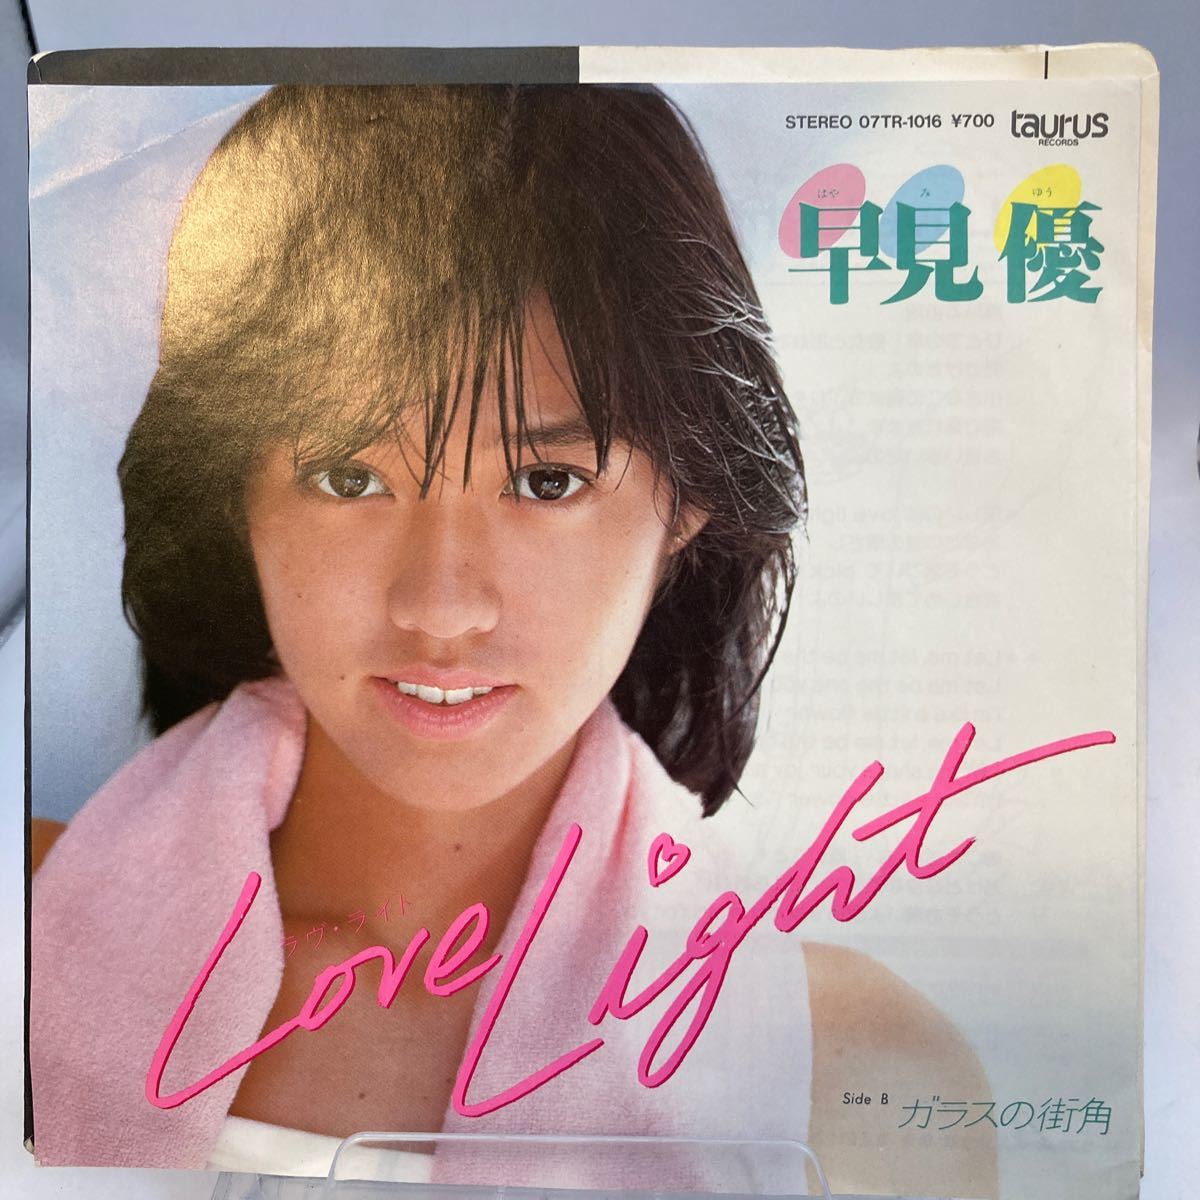 EP/ Hayami Yu [lavu* light Love Light/ glass. street angle ]